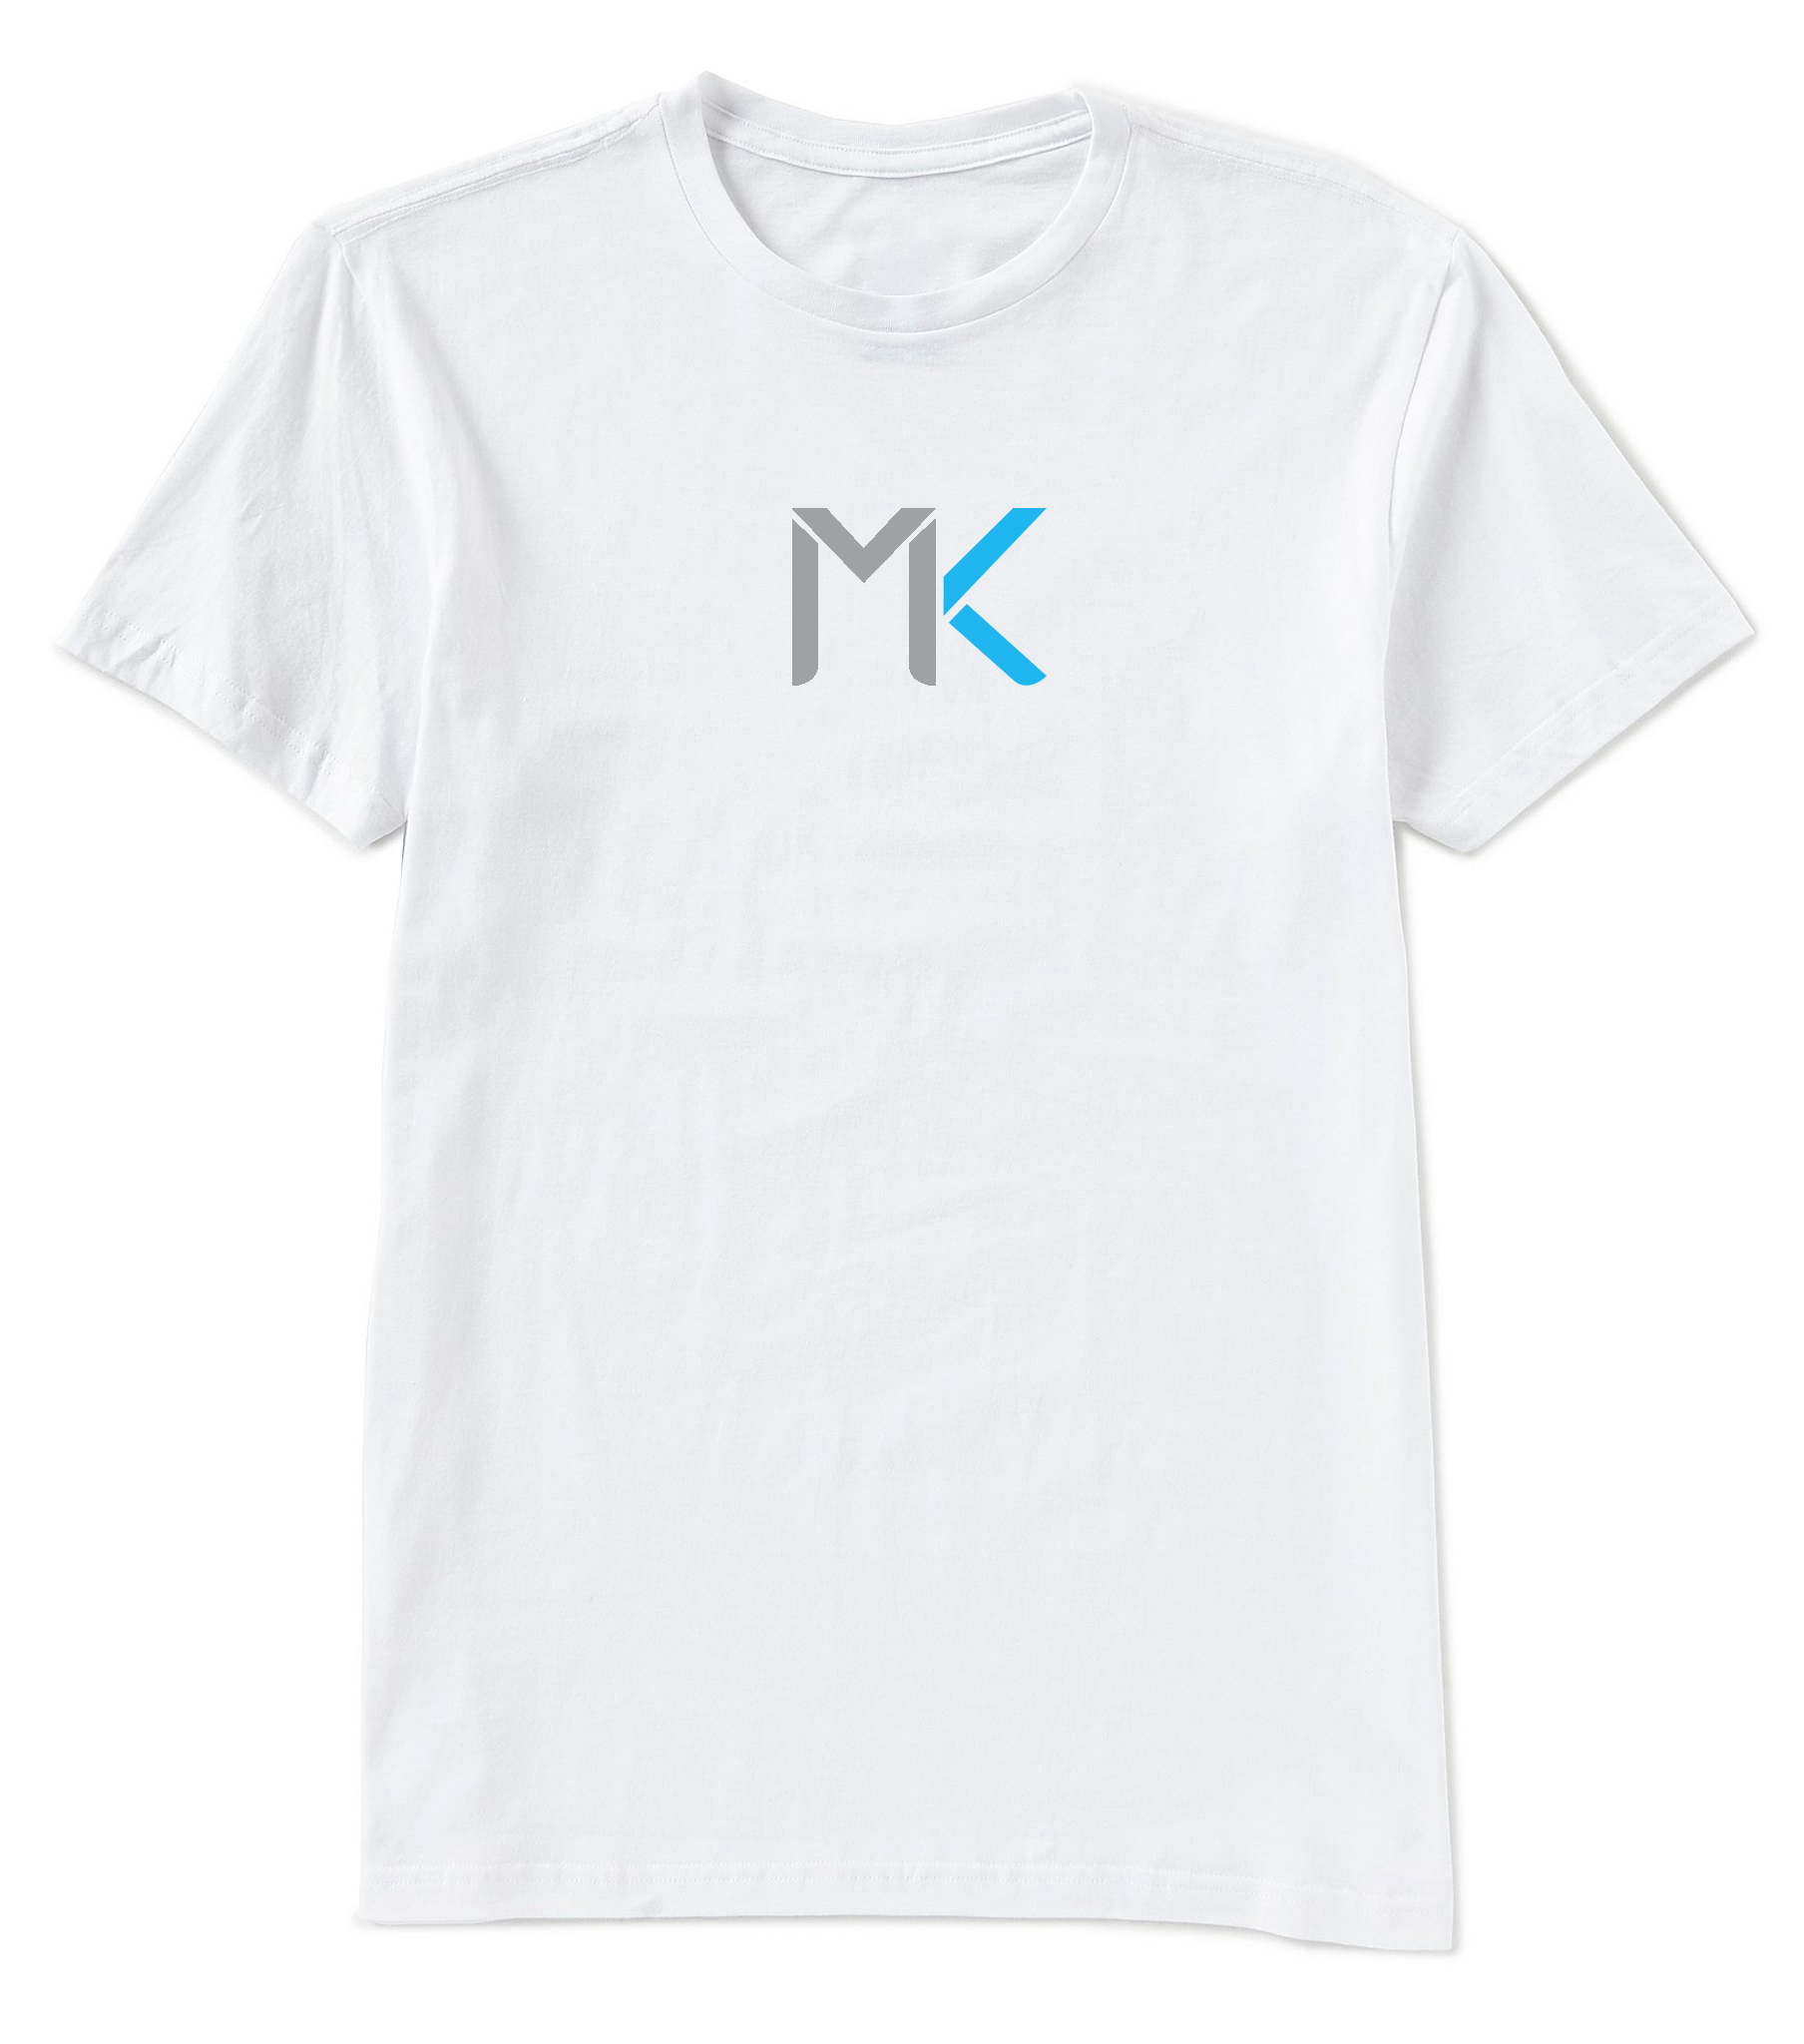 t shirt mk